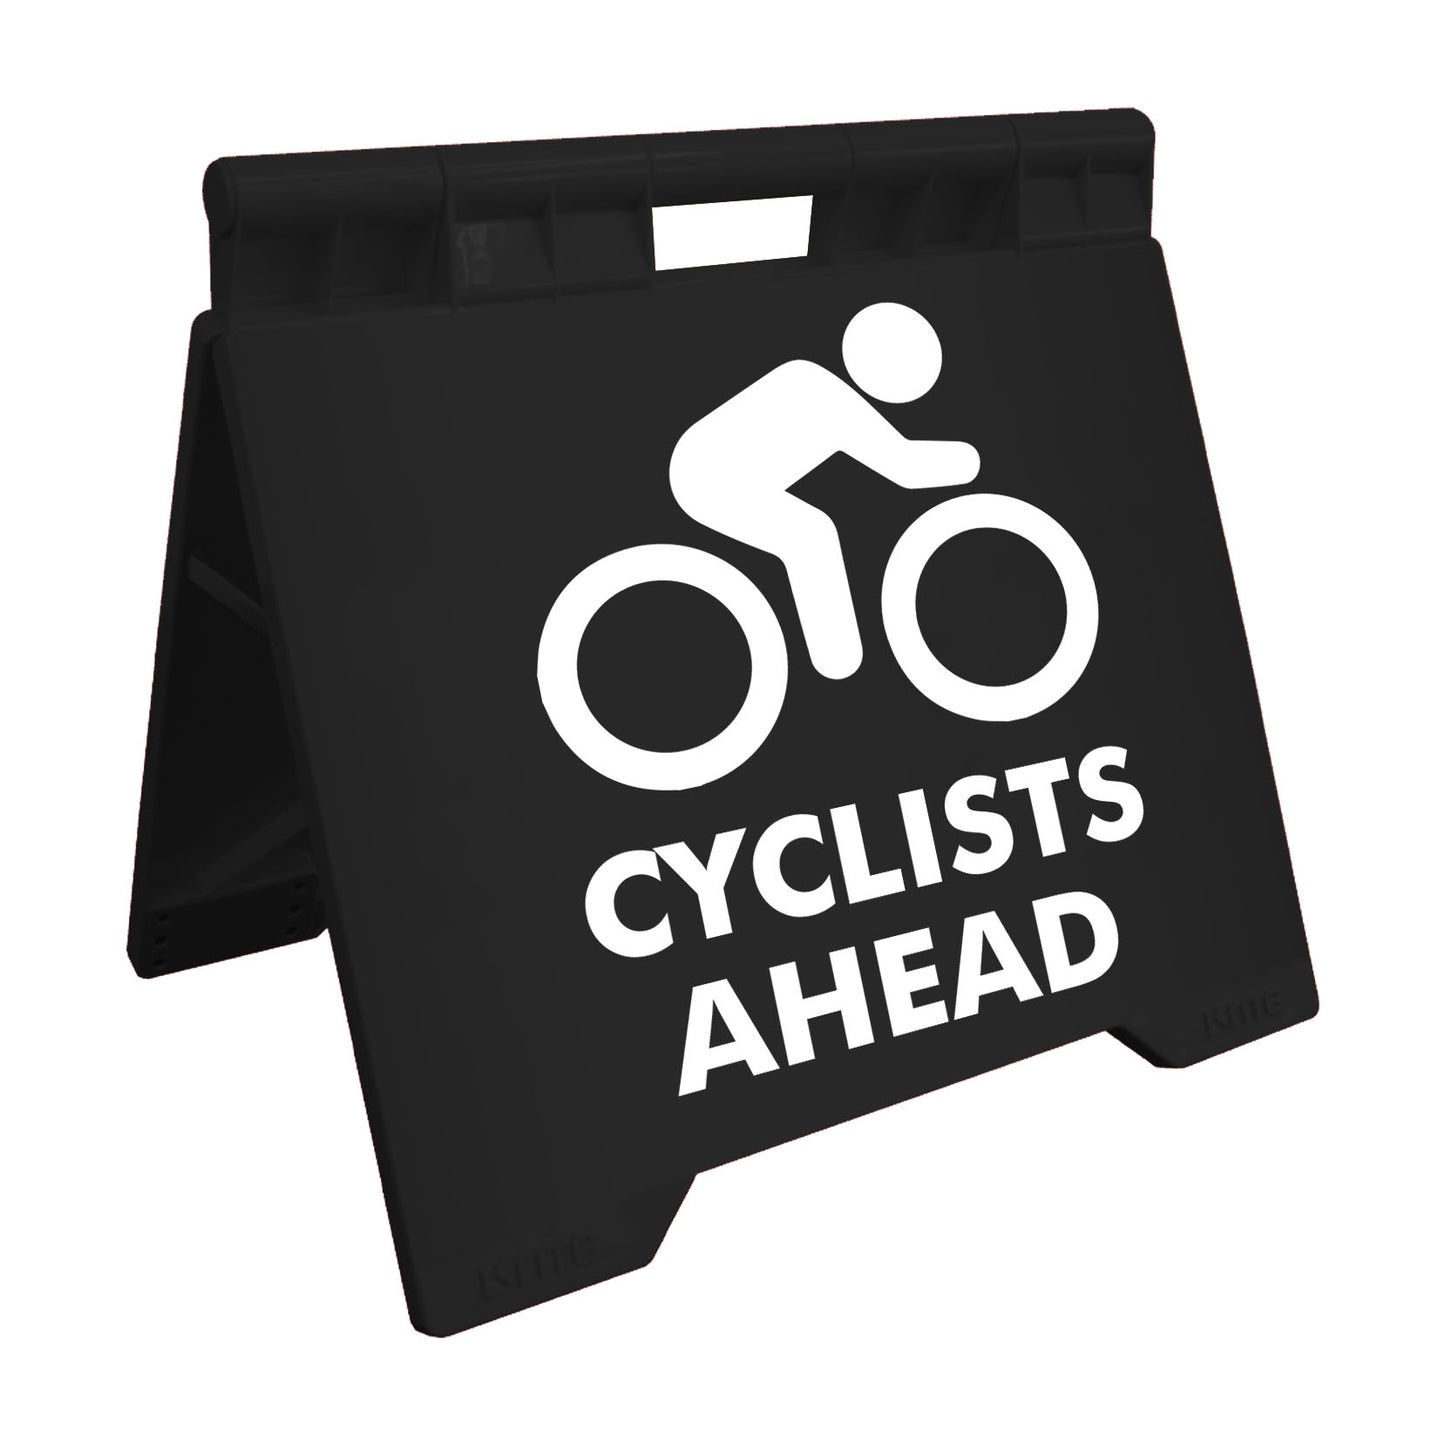 Cyclists Ahead - Evarite A-Frame Sign